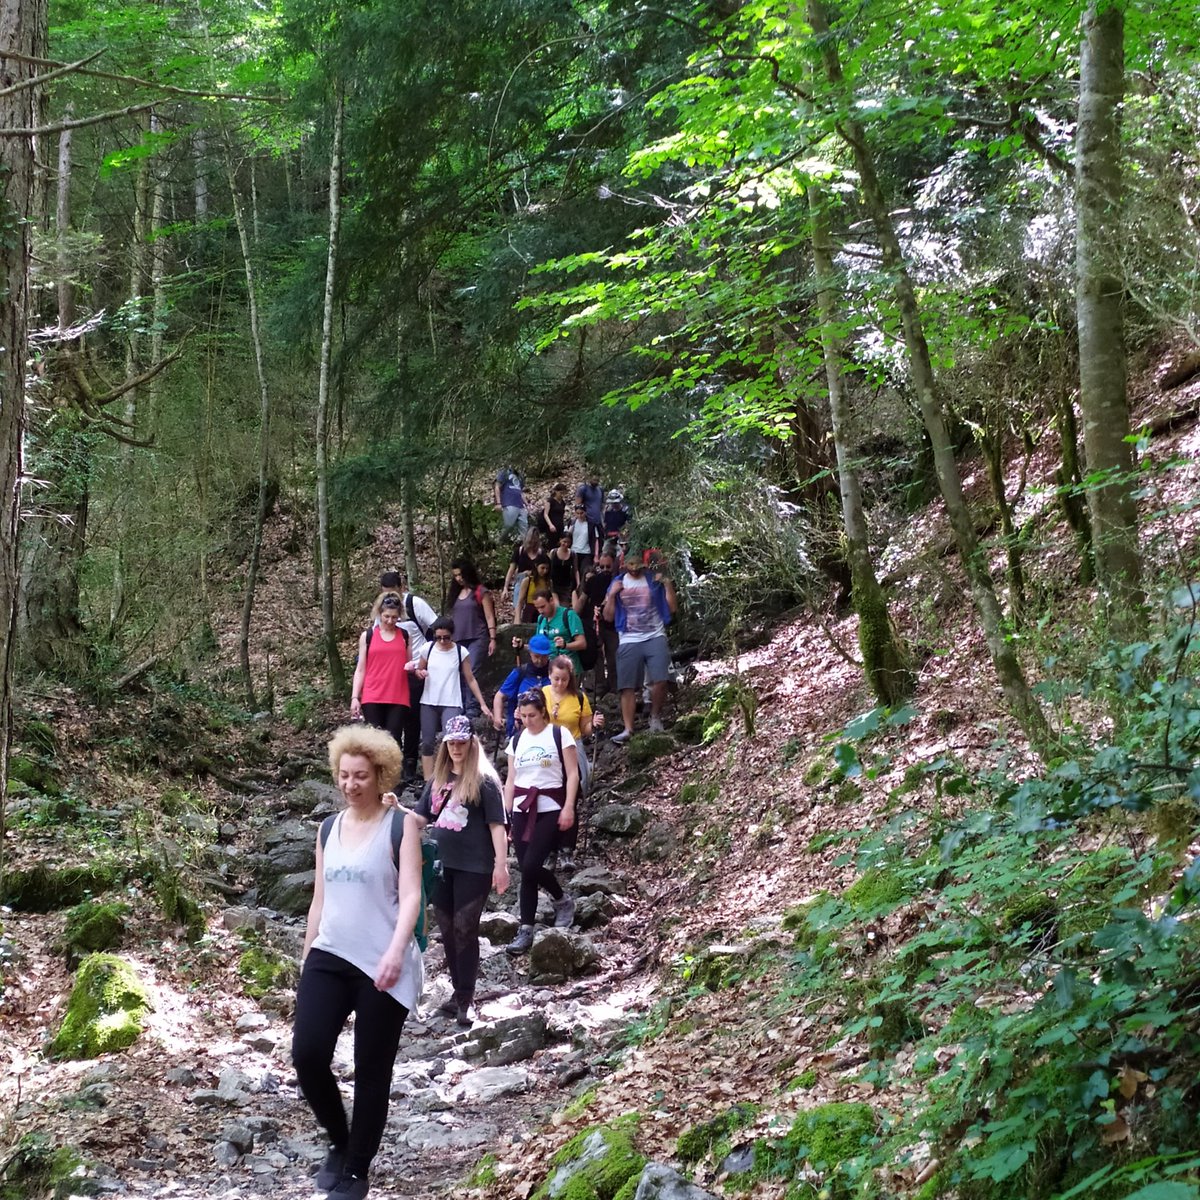 #traceyoureco #neverstopexploring #hikingadventures #mountain #OLYMPUS #verymacedonia #outdoors #action #activities #nature #travelphotography #Summer2020 #friends #trekking #VisitGreece #Greenwood #experience #Routes #Greece